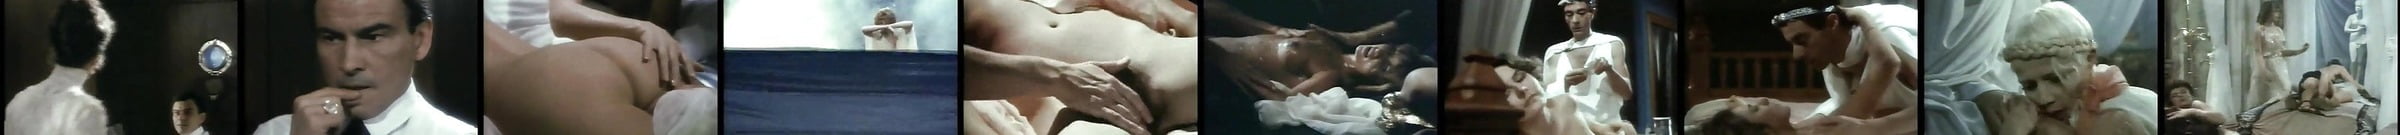 Free Movie Sex Scenes Porn Videos Xhamster